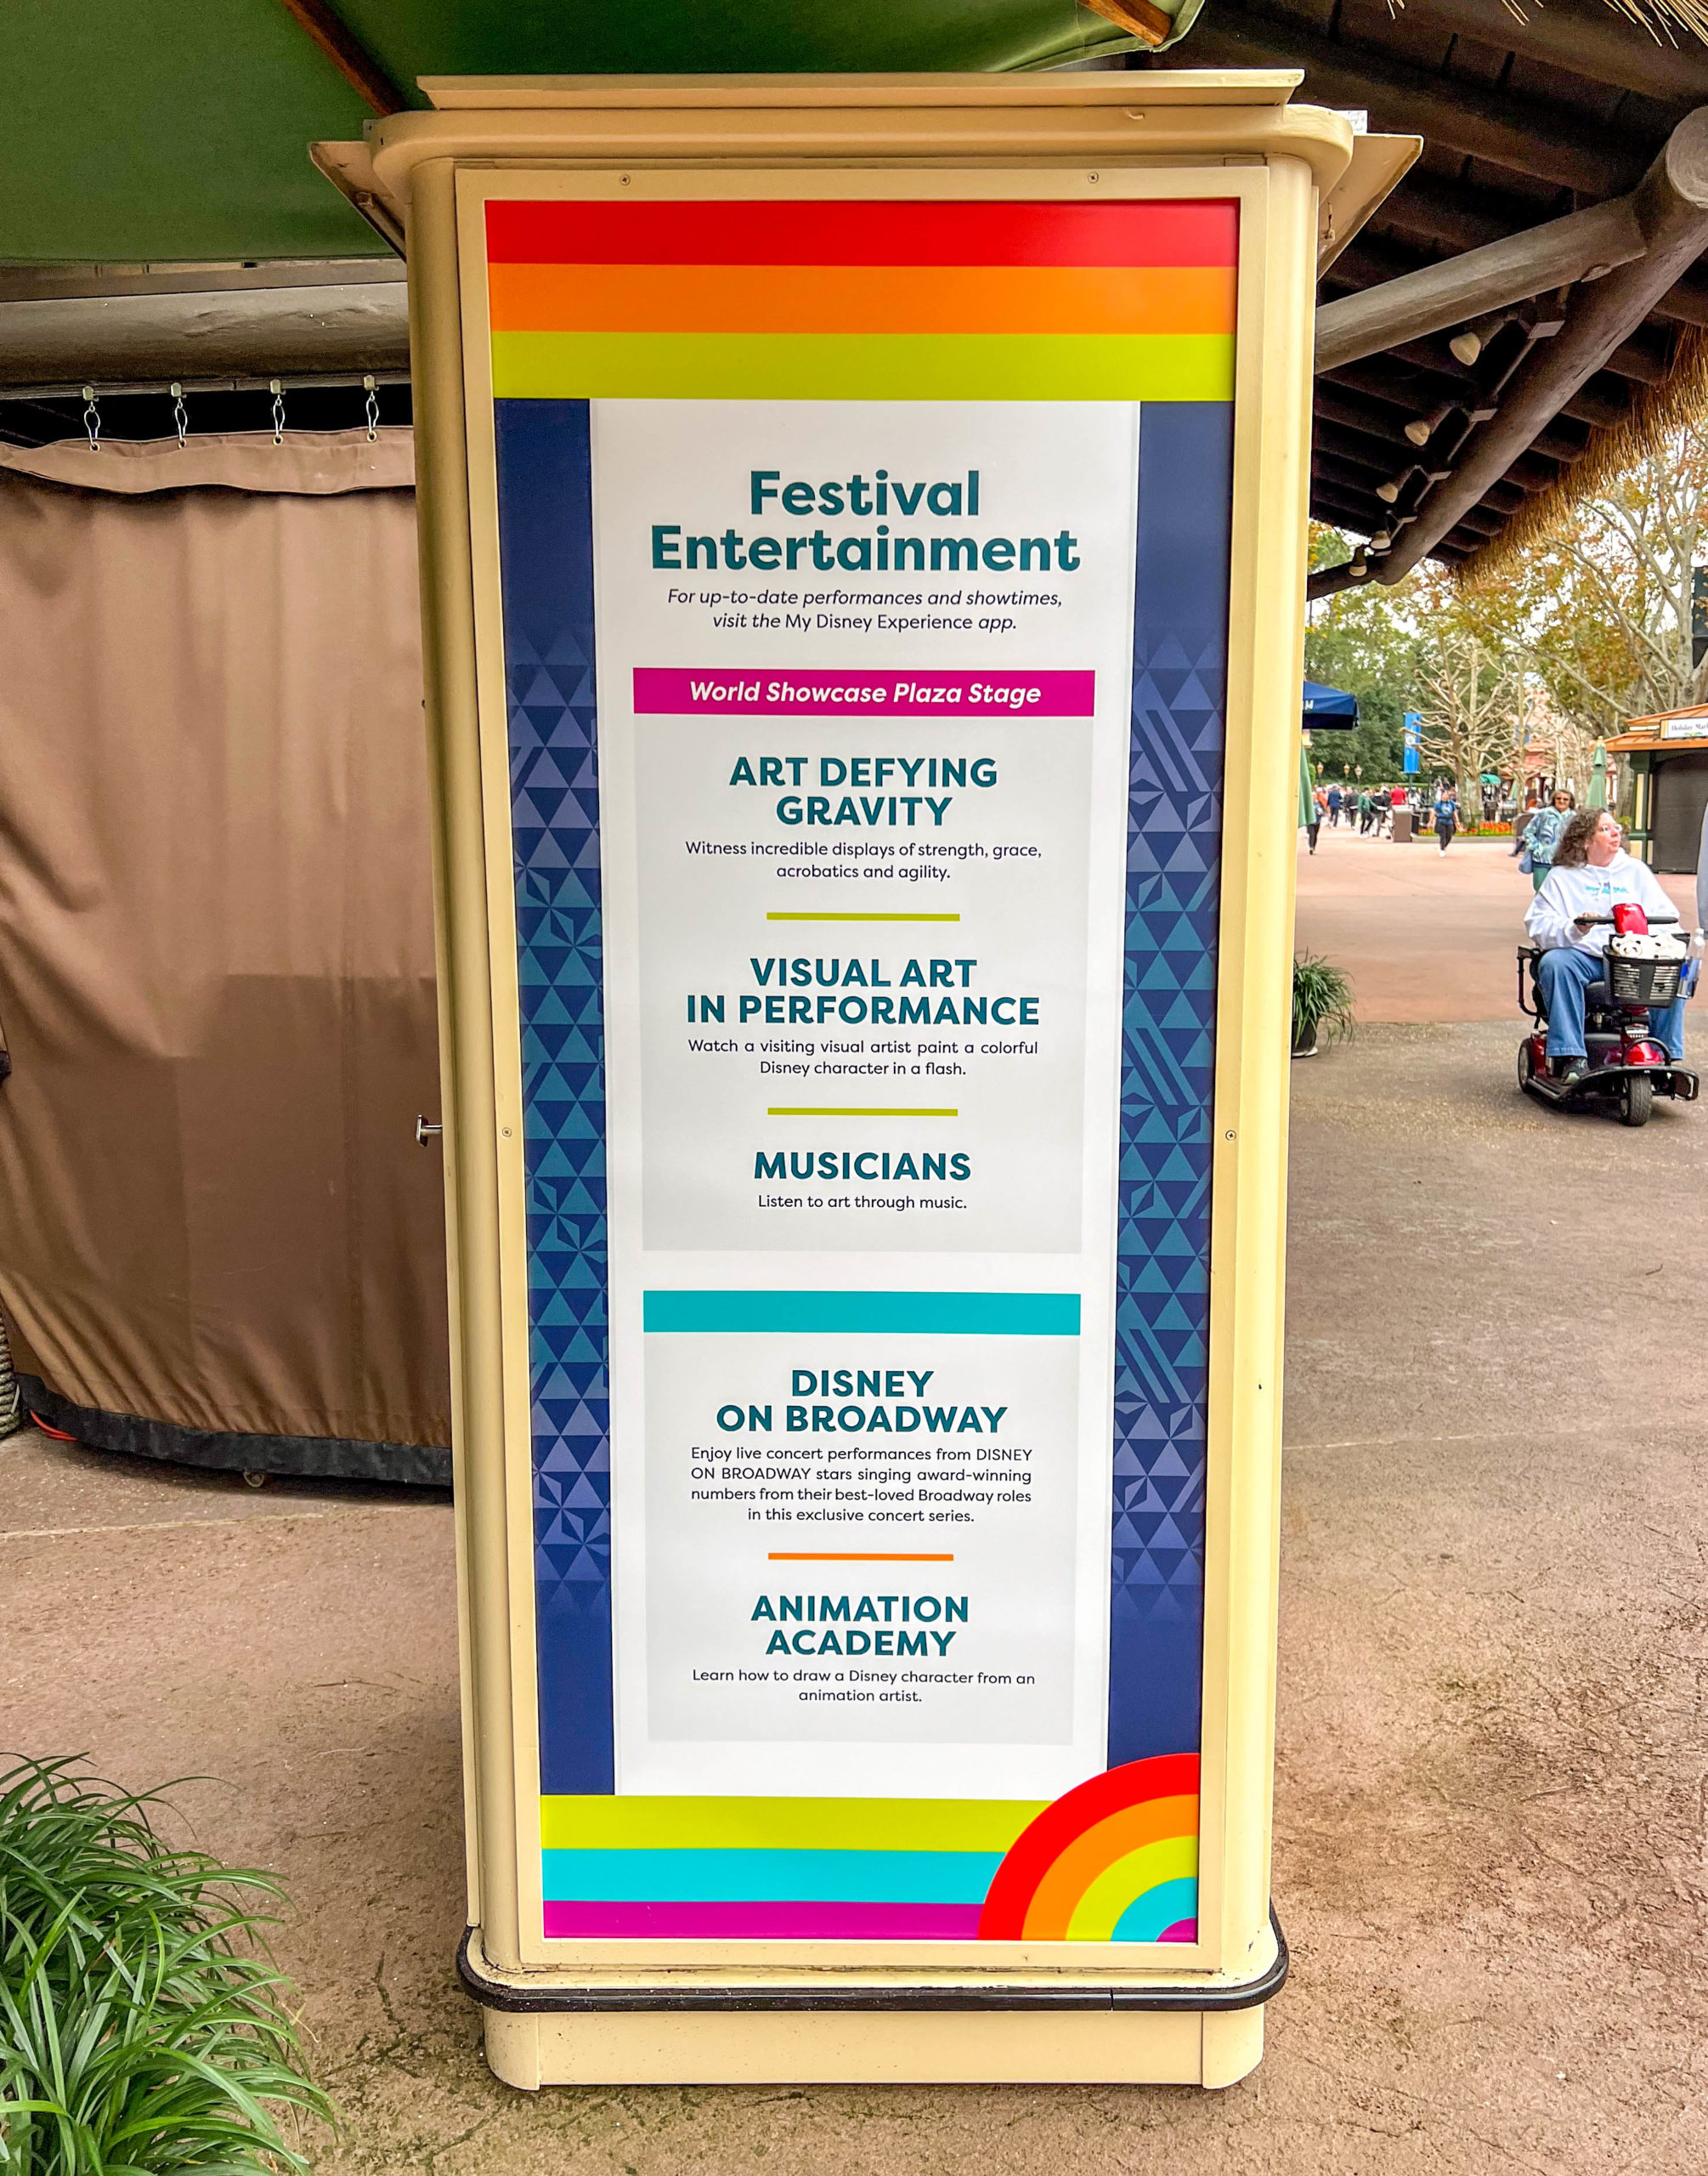 Festival Entertainment